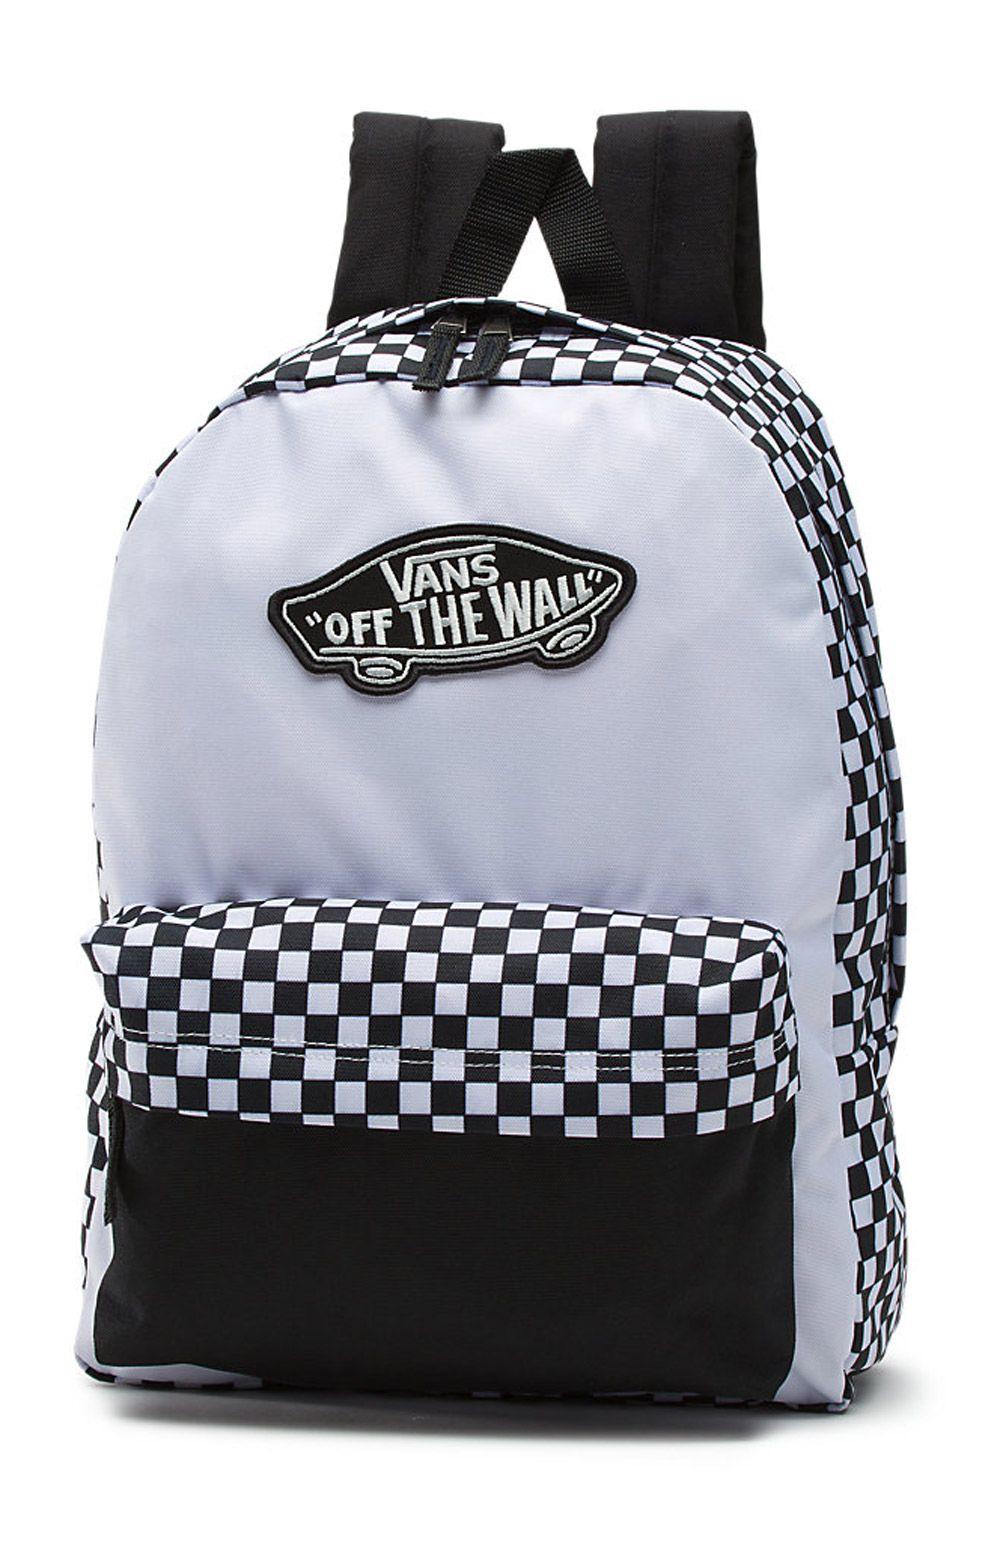 Black and White Checkerboard Logo - Vans Women's, Realm Backpack - Black/White Checkerboard | MLTD